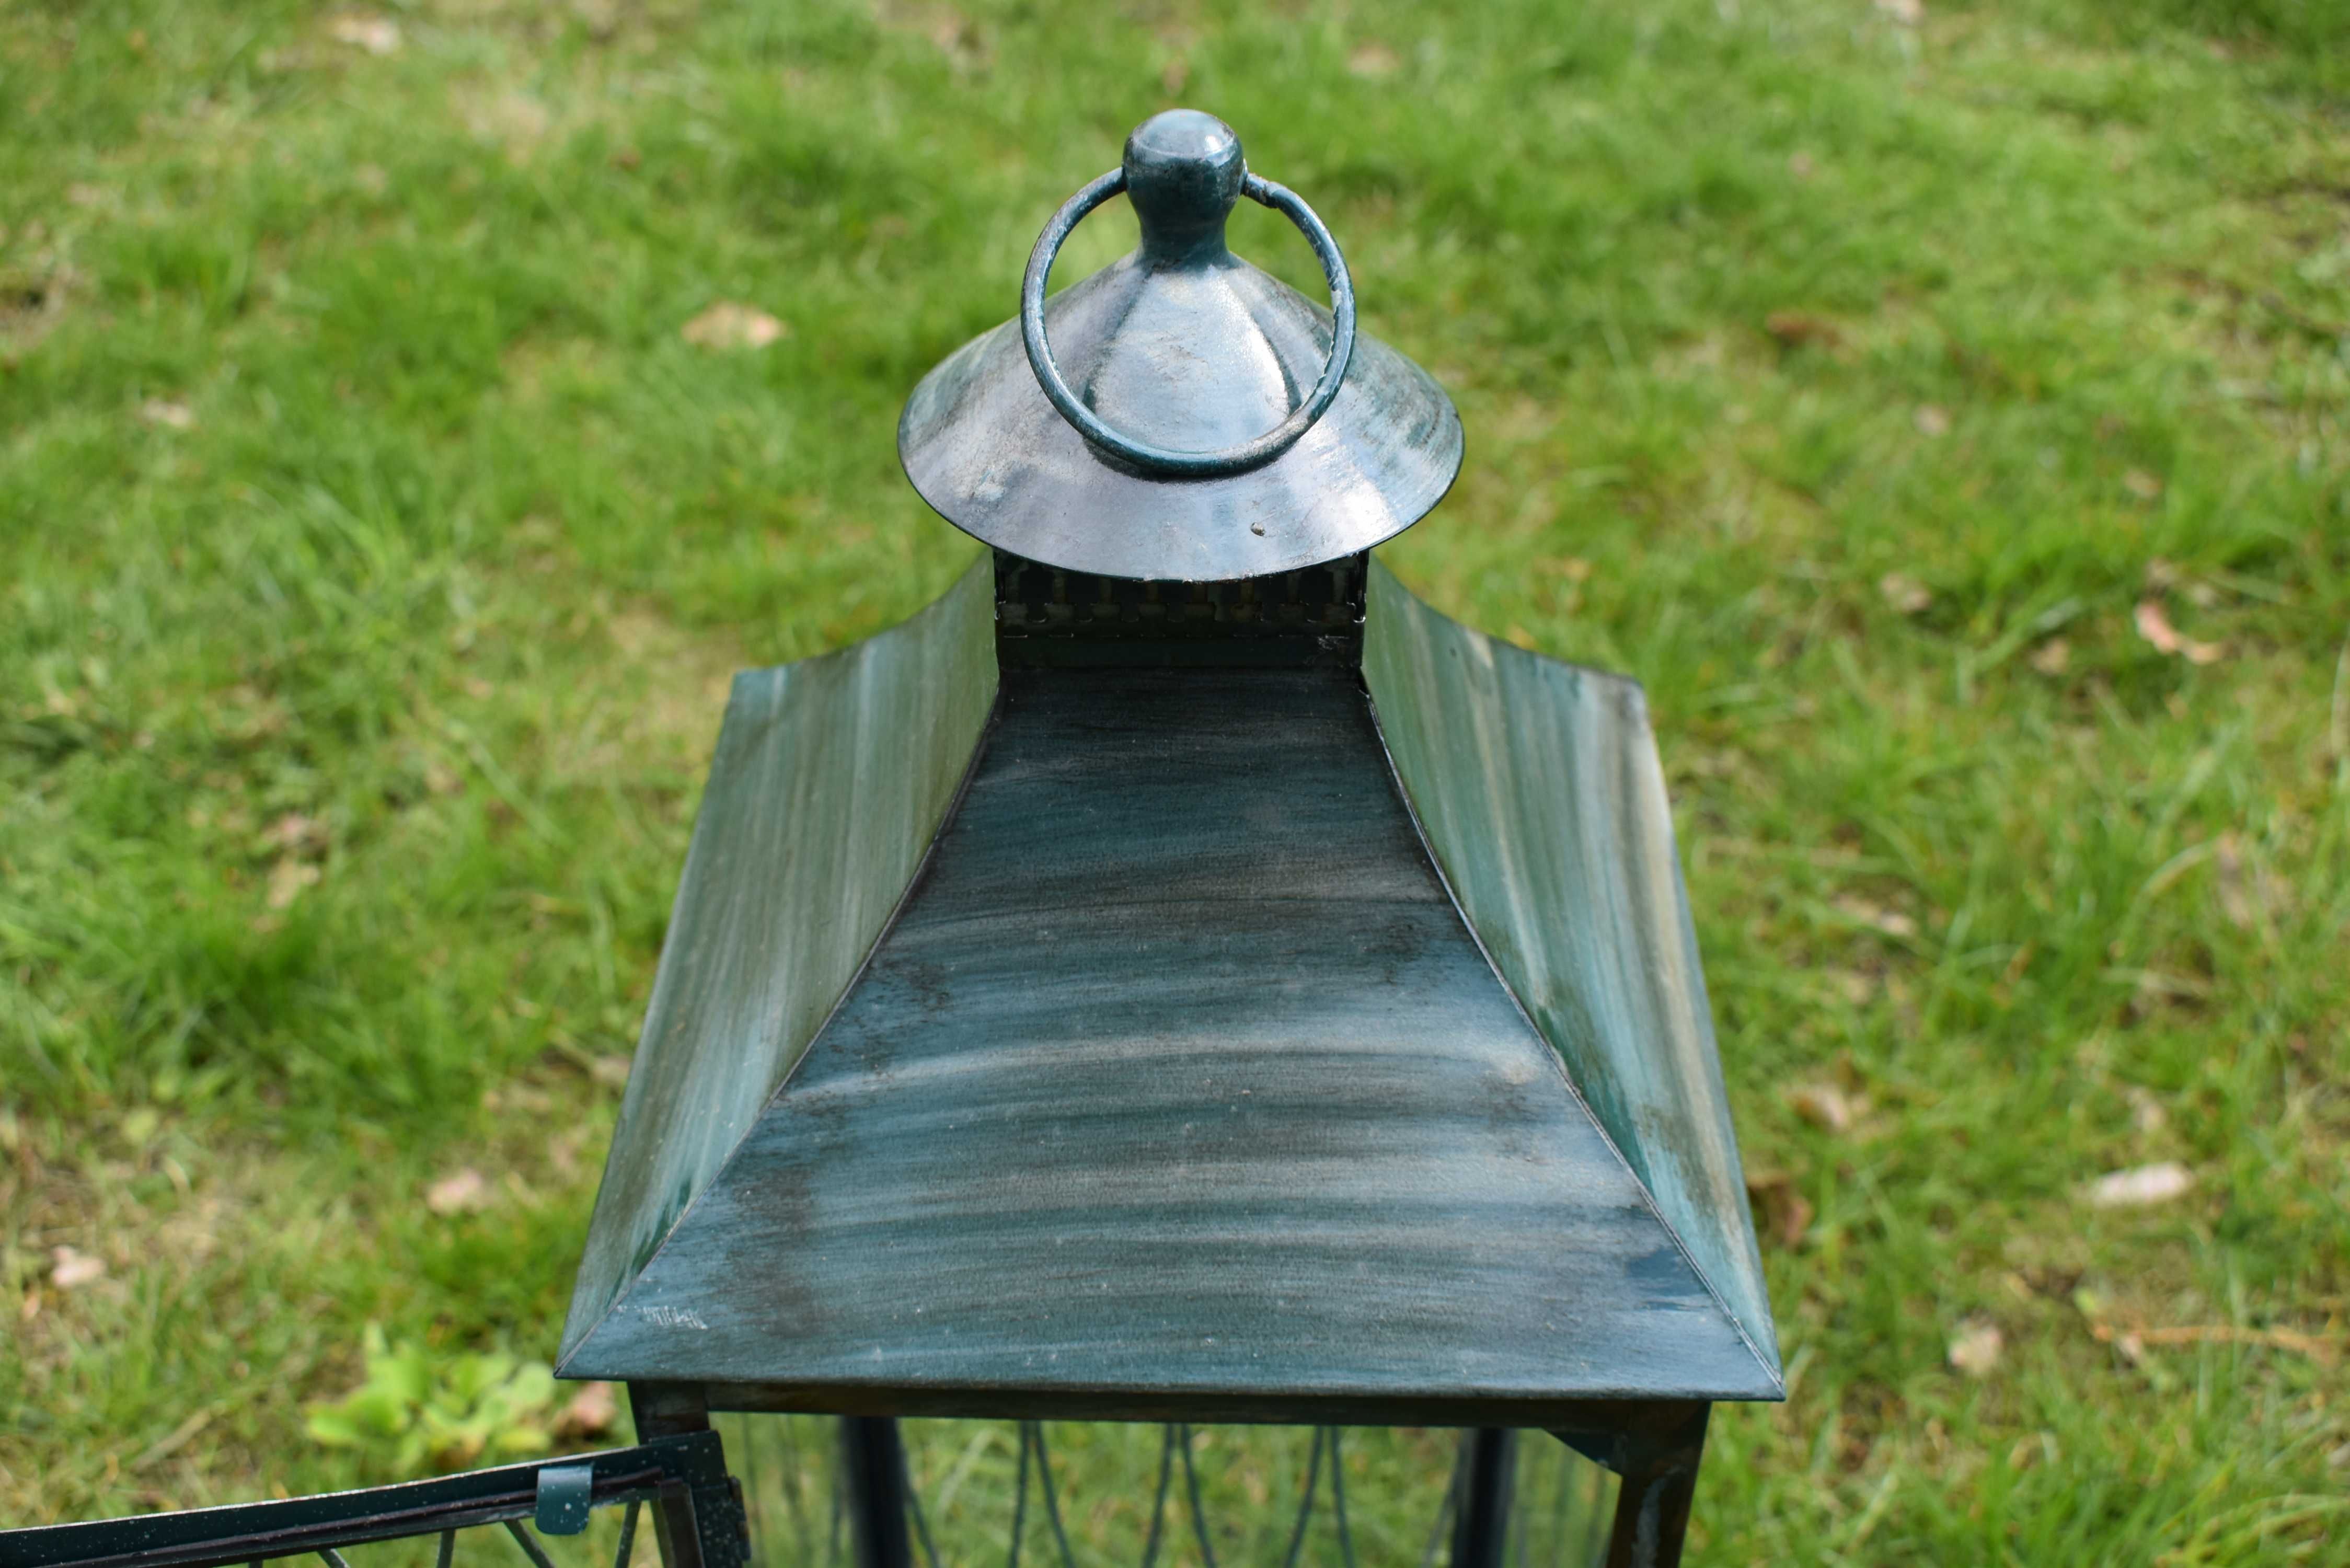 Latarnia retro latarenka lampion świecznik
70cm